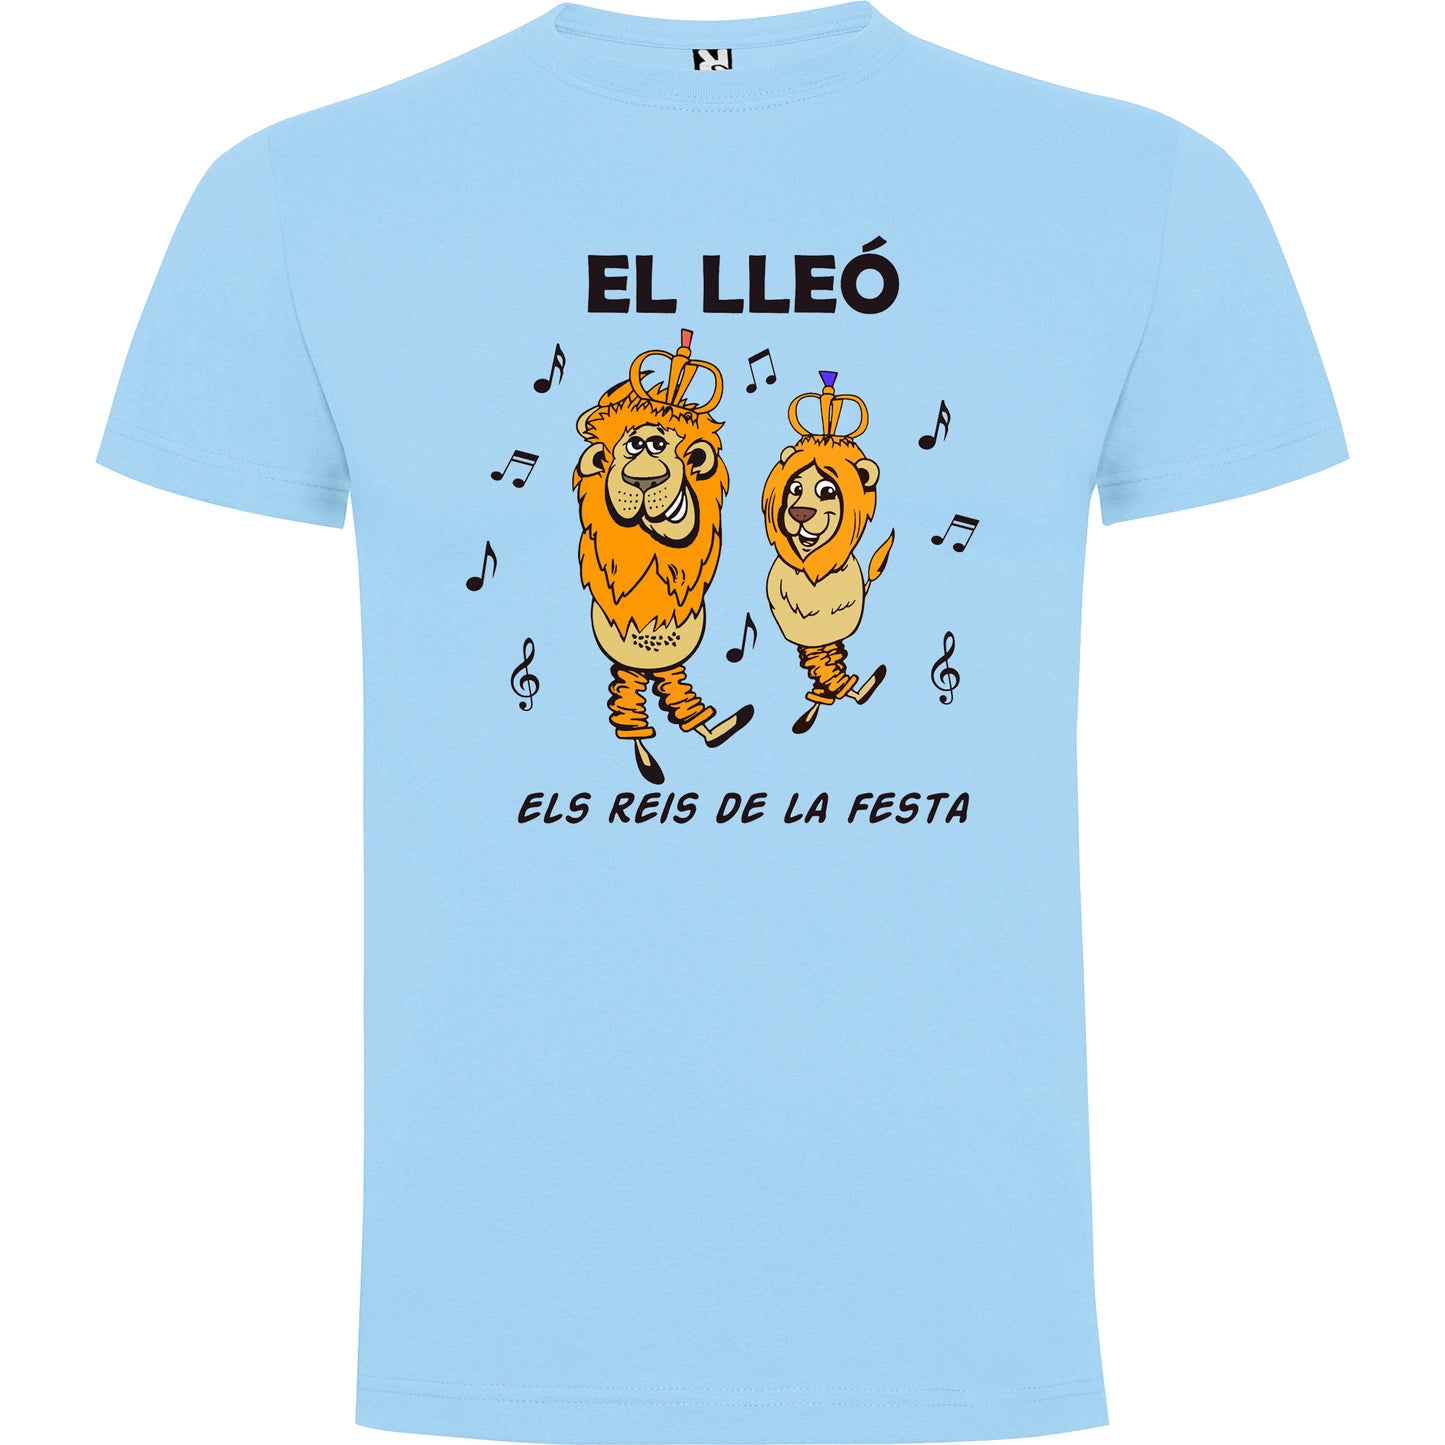 Camiseta personalizada El lleó